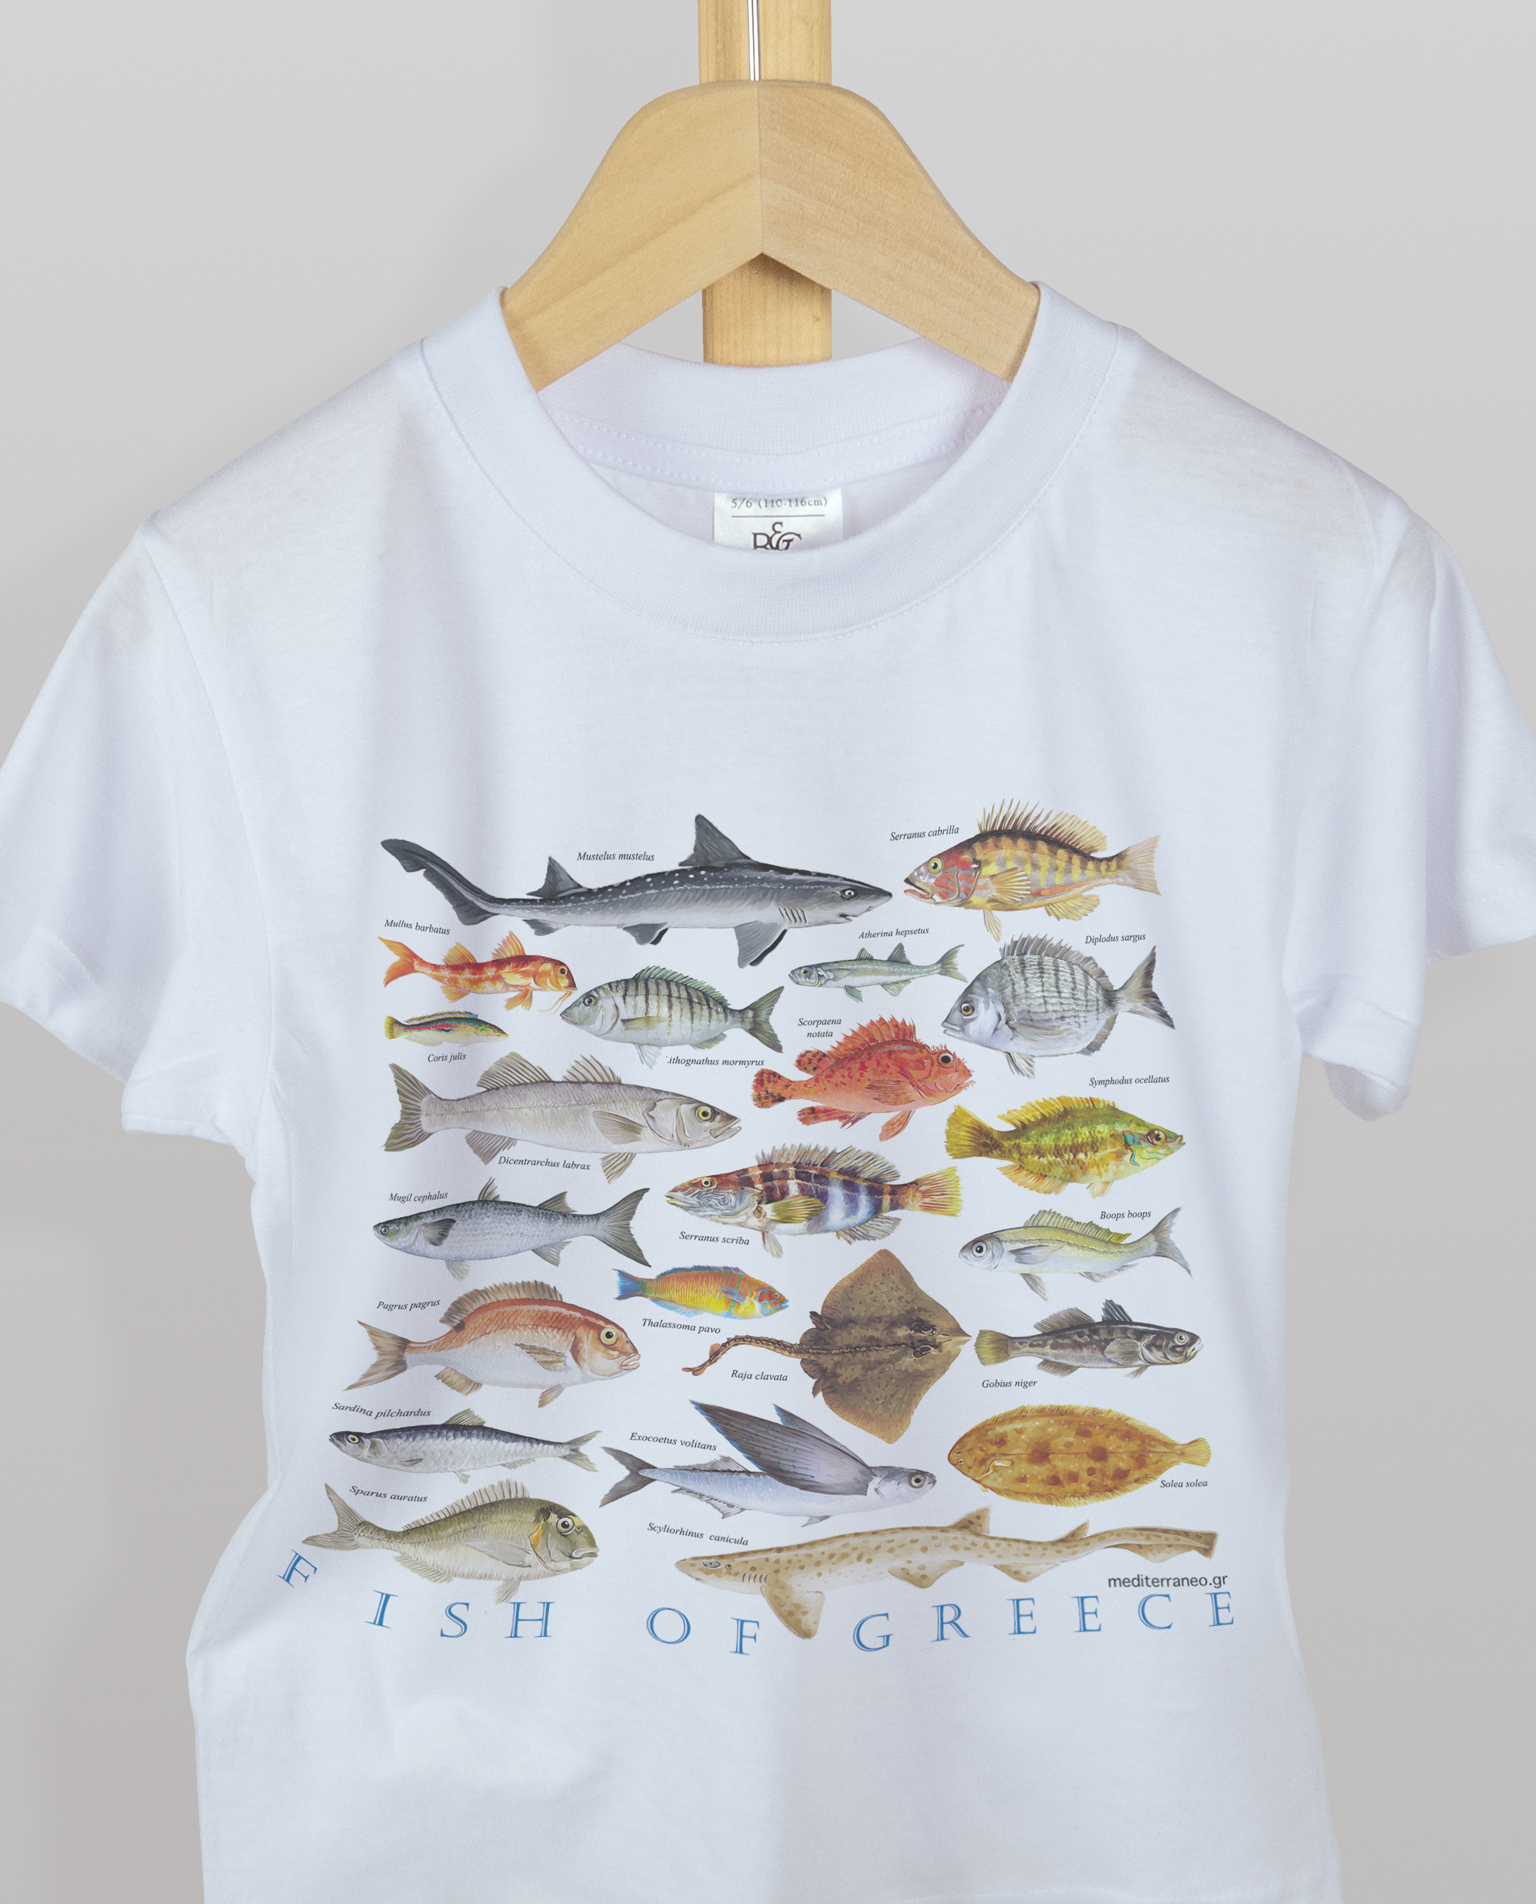 https://mediterraneo.gr/wp-content/uploads/2022/09/fish-of-greece-kids-tshirt.jpg